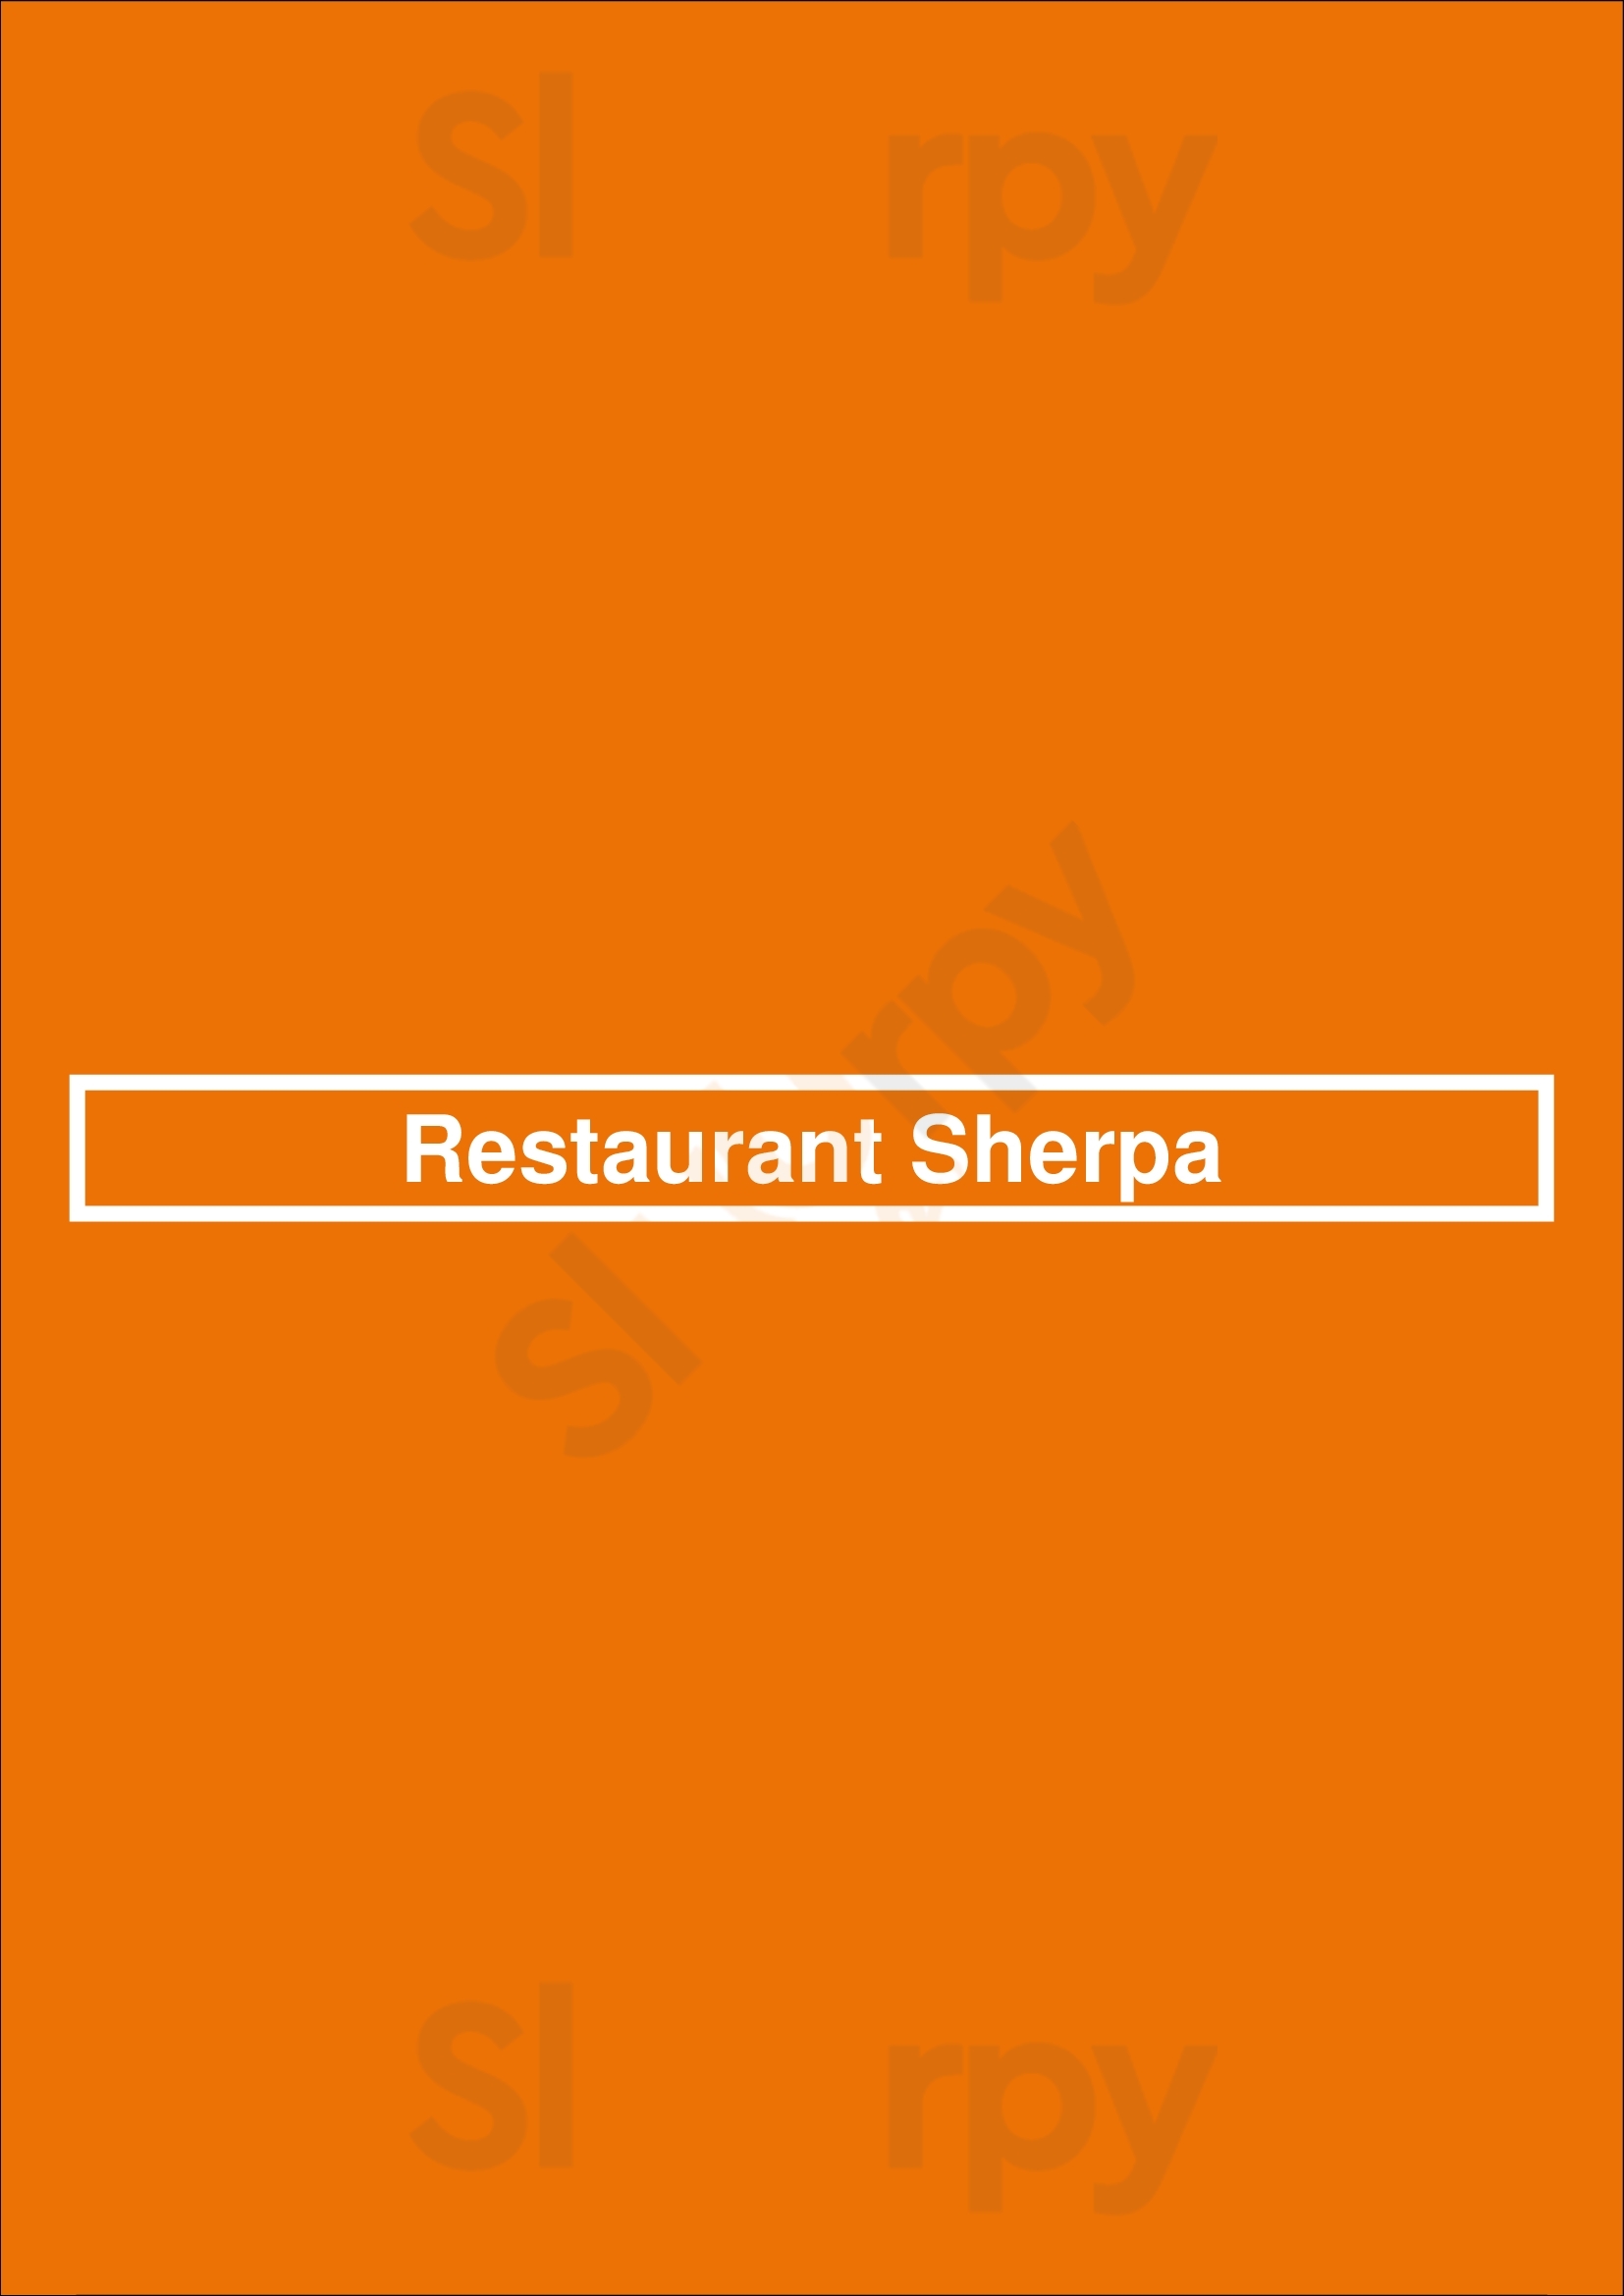 Restaurant Sherpa Amsterdam Menu - 1